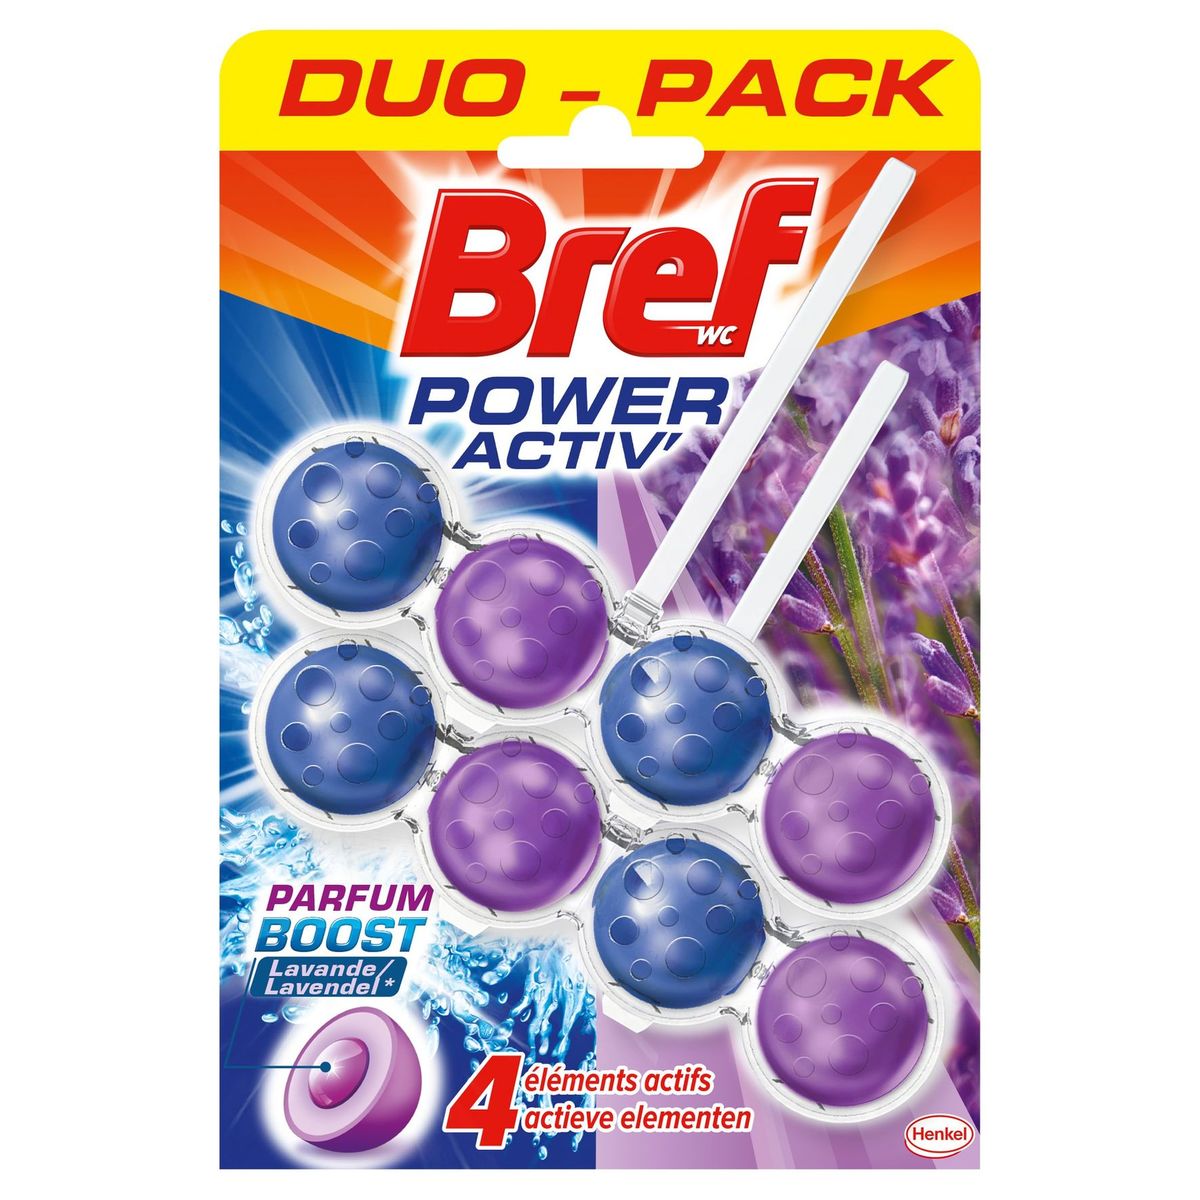 Bref WC Power Activ' Parfum Boost Lavende Duo Pack 2 x 50 g